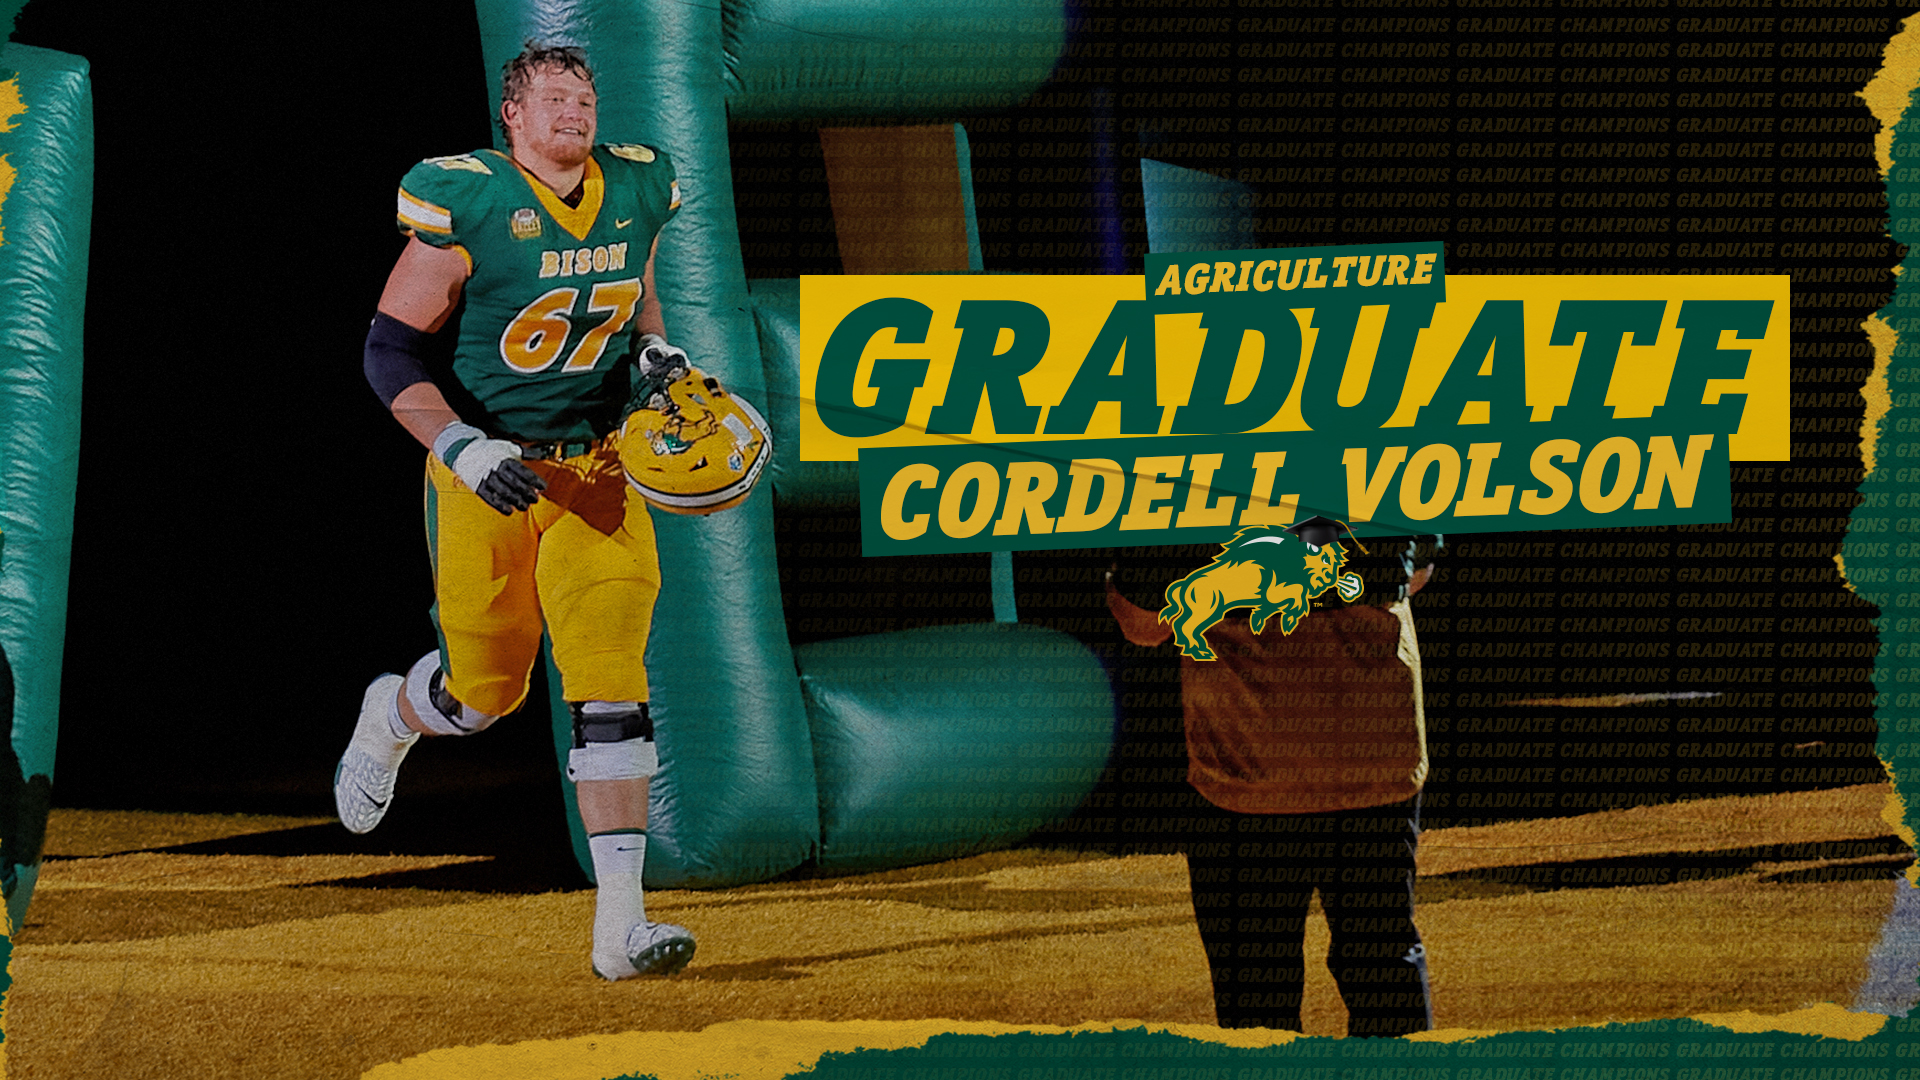 NDSU Football on Twitter: "🎓 Congratulations Cordell 🎓 #️⃣ 𝟔𝟕 🔰 𝐂𝐨𝐫𝐝𝐞𝐥𝐥  𝐕𝐨𝐥𝐬𝐨𝐧 🏈 𝐎𝐟𝐟𝐞𝐧𝐬𝐢𝐯𝐞 𝐓𝐚𝐜𝐤𝐥𝐞 🏠 𝐁𝐚𝐥𝐟𝐨𝐮𝐫, 𝐍𝐃 📚  𝐀𝐠𝐫𝐢𝐜𝐮𝐥𝐭𝐮𝐫𝐞 𝐒𝐜𝐢𝐞𝐧𝐜𝐞 #GraduateChampions  https://t.co/KSdO9G2Hhd" / Twitter